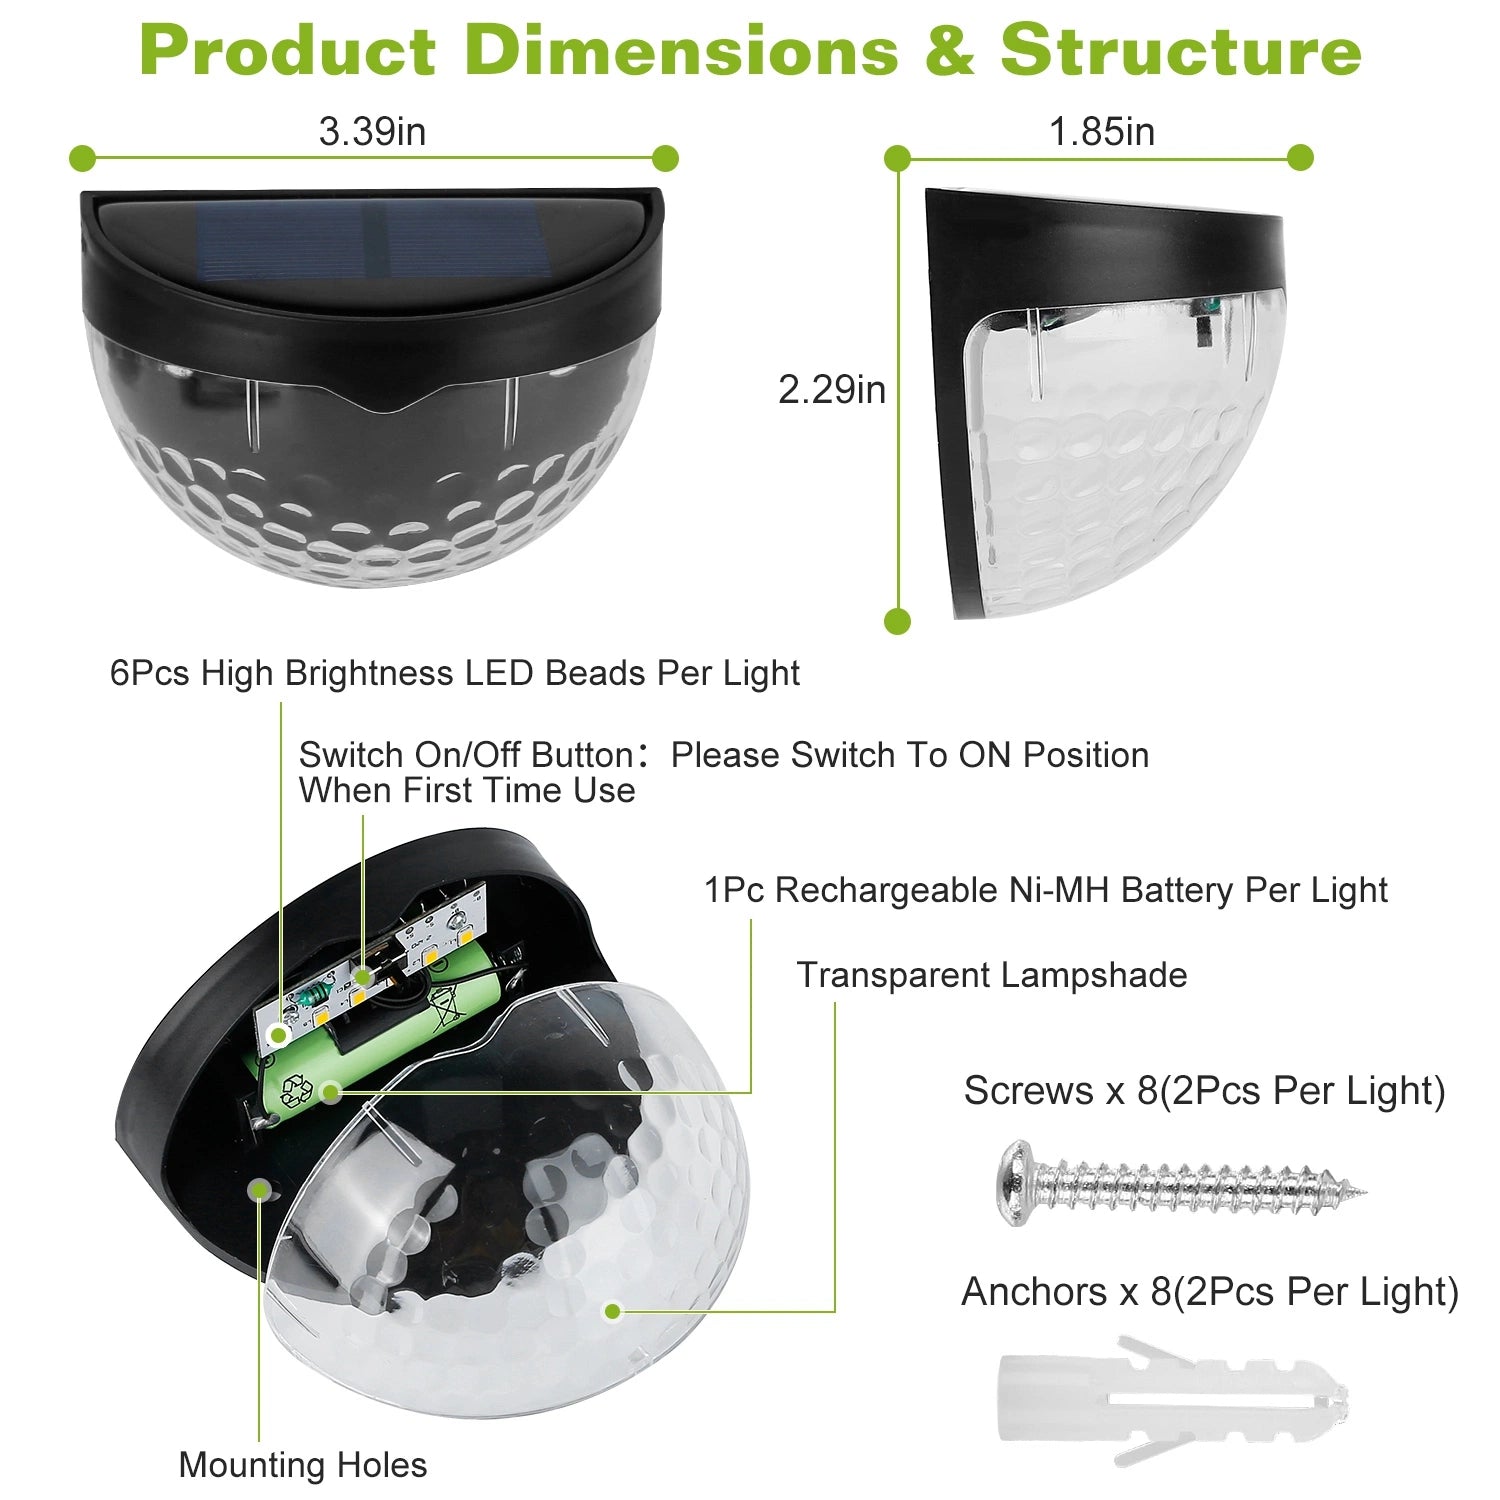 LazyDeck™ 4Pcs Solar Fence Lights Outdoor Dusk To Dawn Sensor Decorative Deck Lamps IP65 Waterproof - Lazy Pro